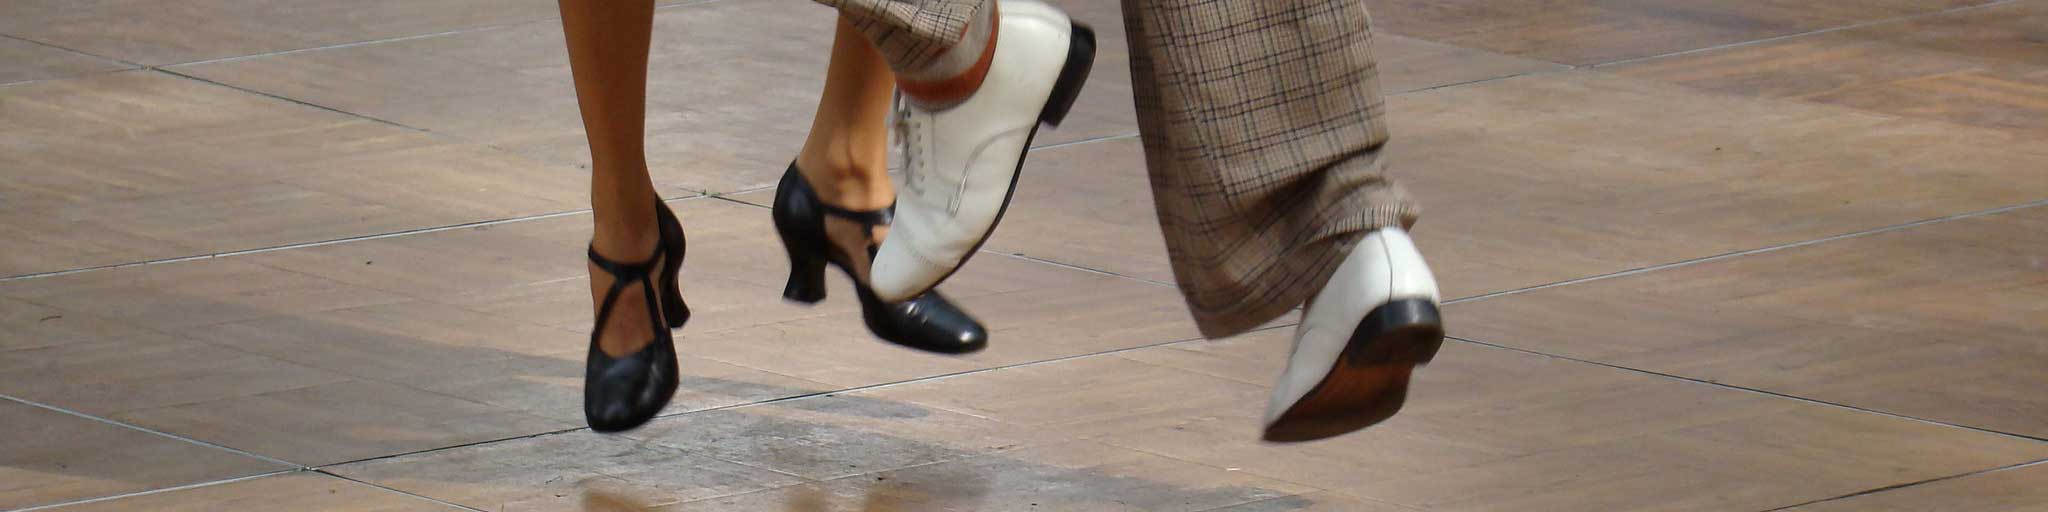 Fötter som dansar